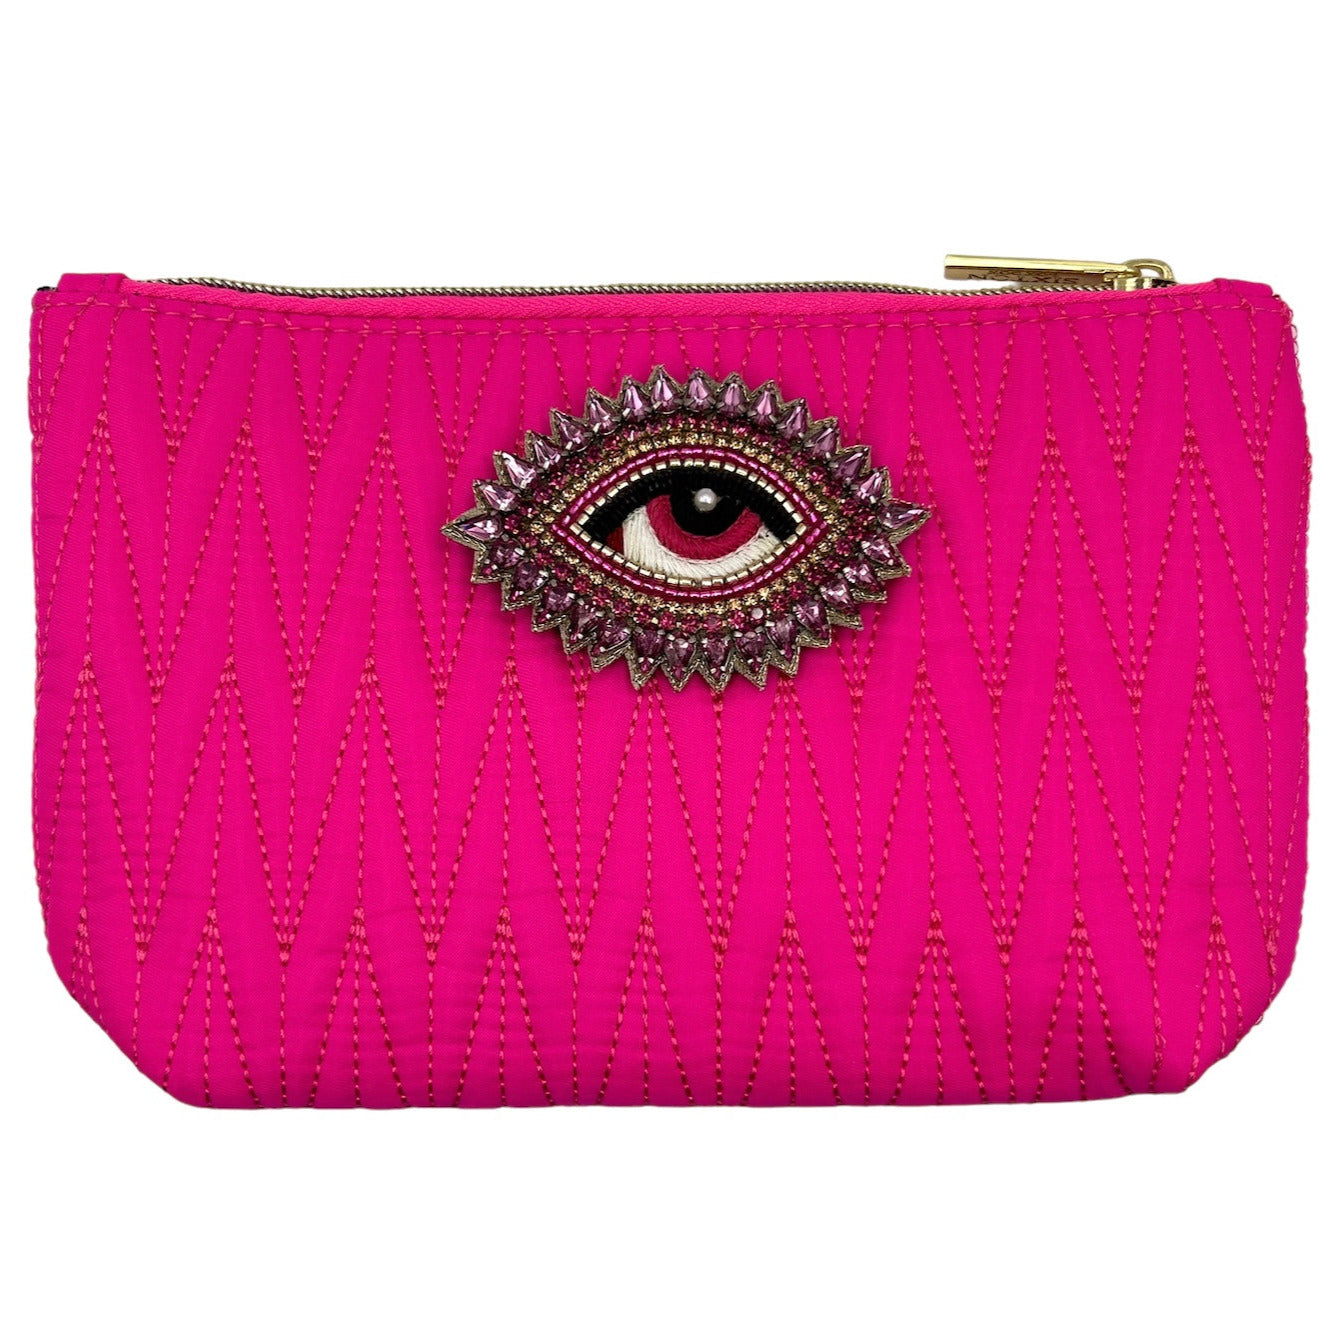 Bright pink Tribeca make up bag with a rose eye pin